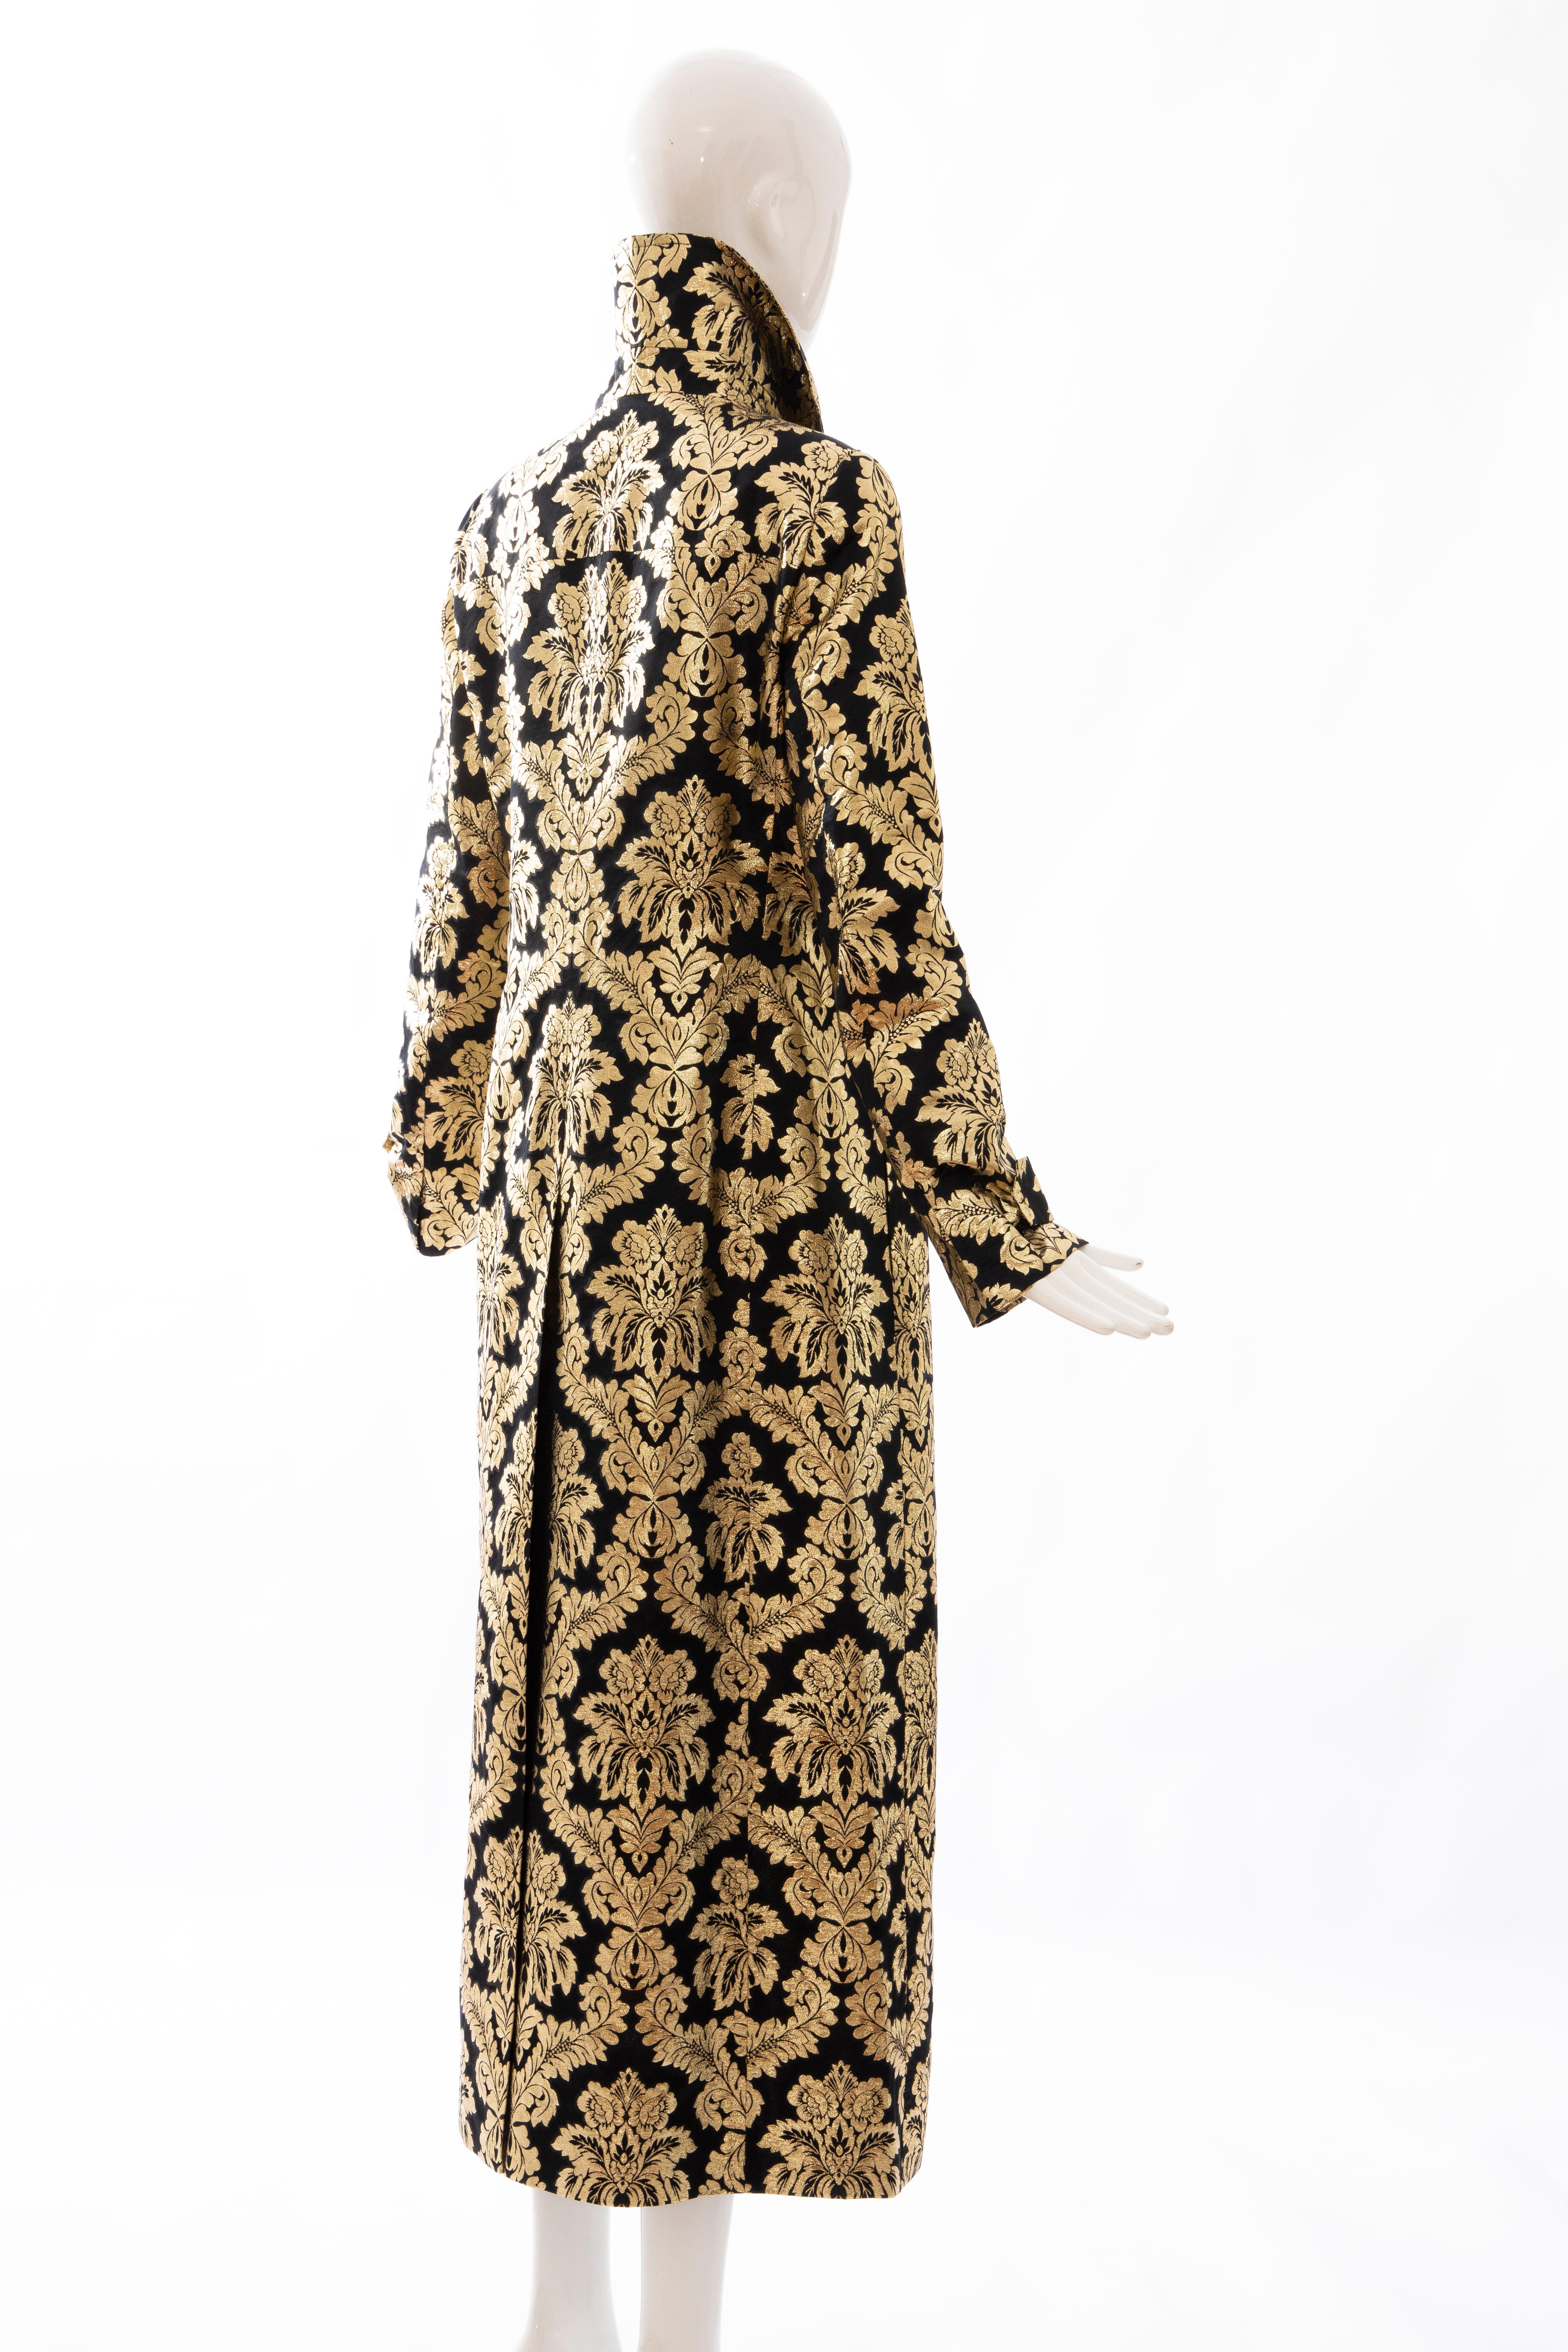 Women's Dolce & Gabbana Runway Black Silk Gold Floral Brocade Evening Coat, Fall 2000 For Sale